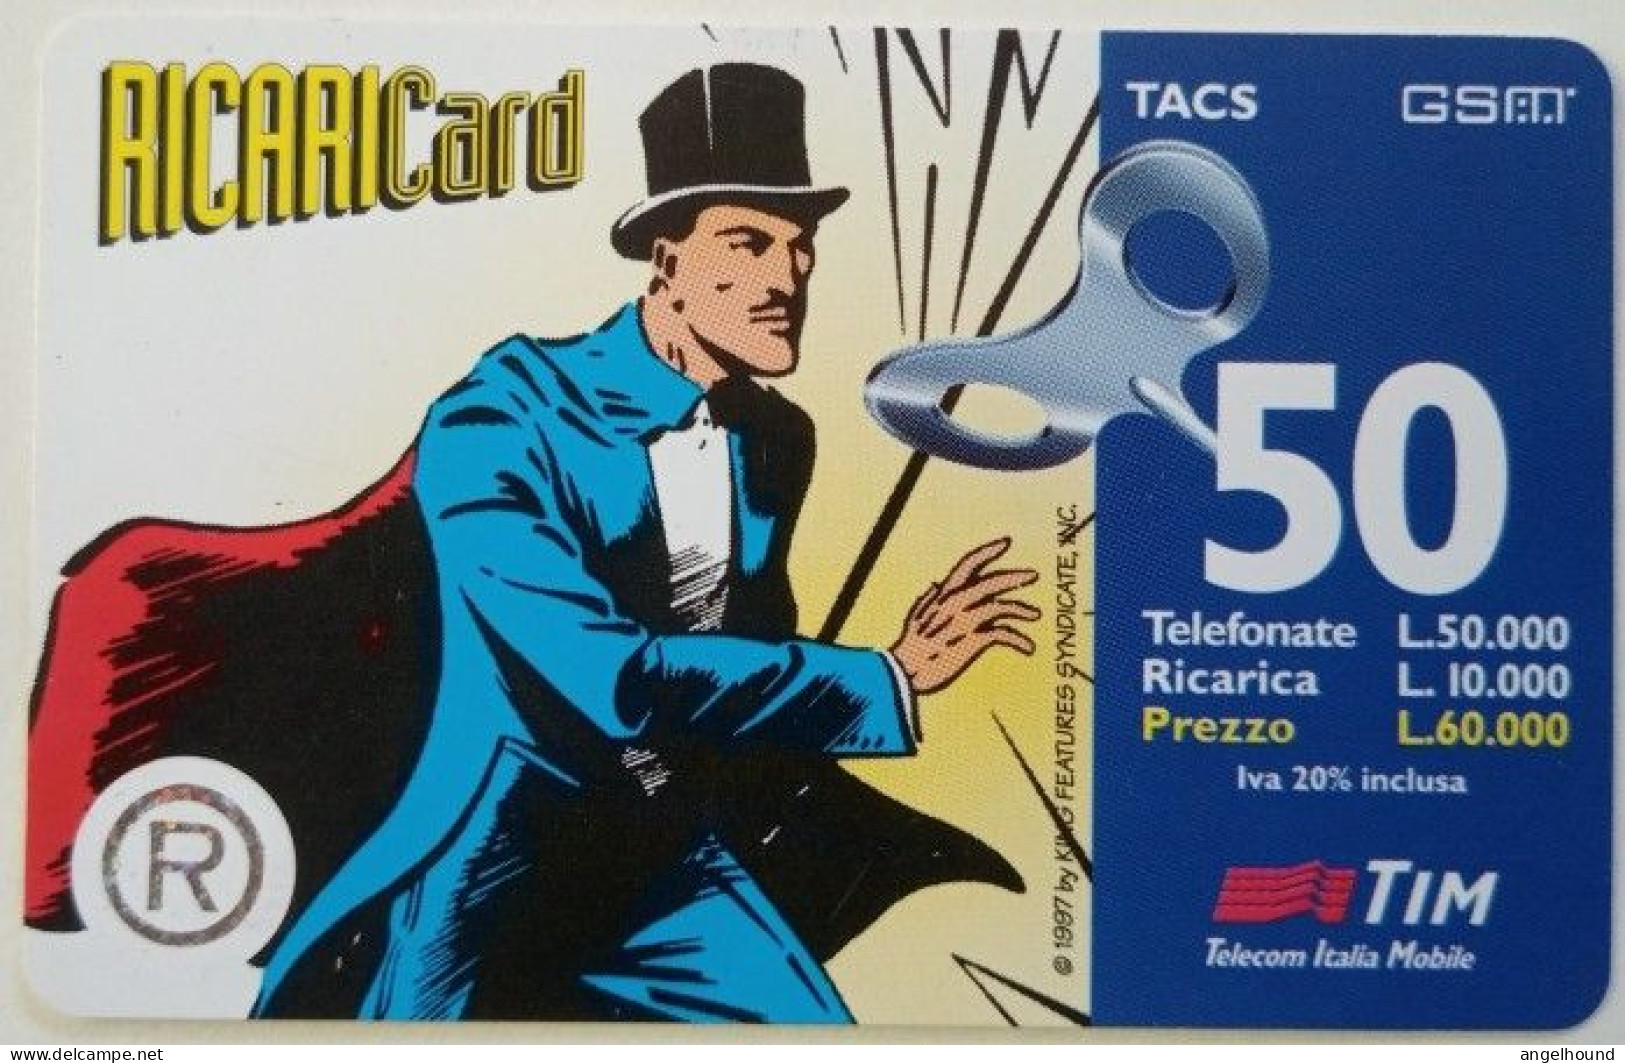 Italy Ricari Card - [2] Sim Cards, Prepaid & Refills